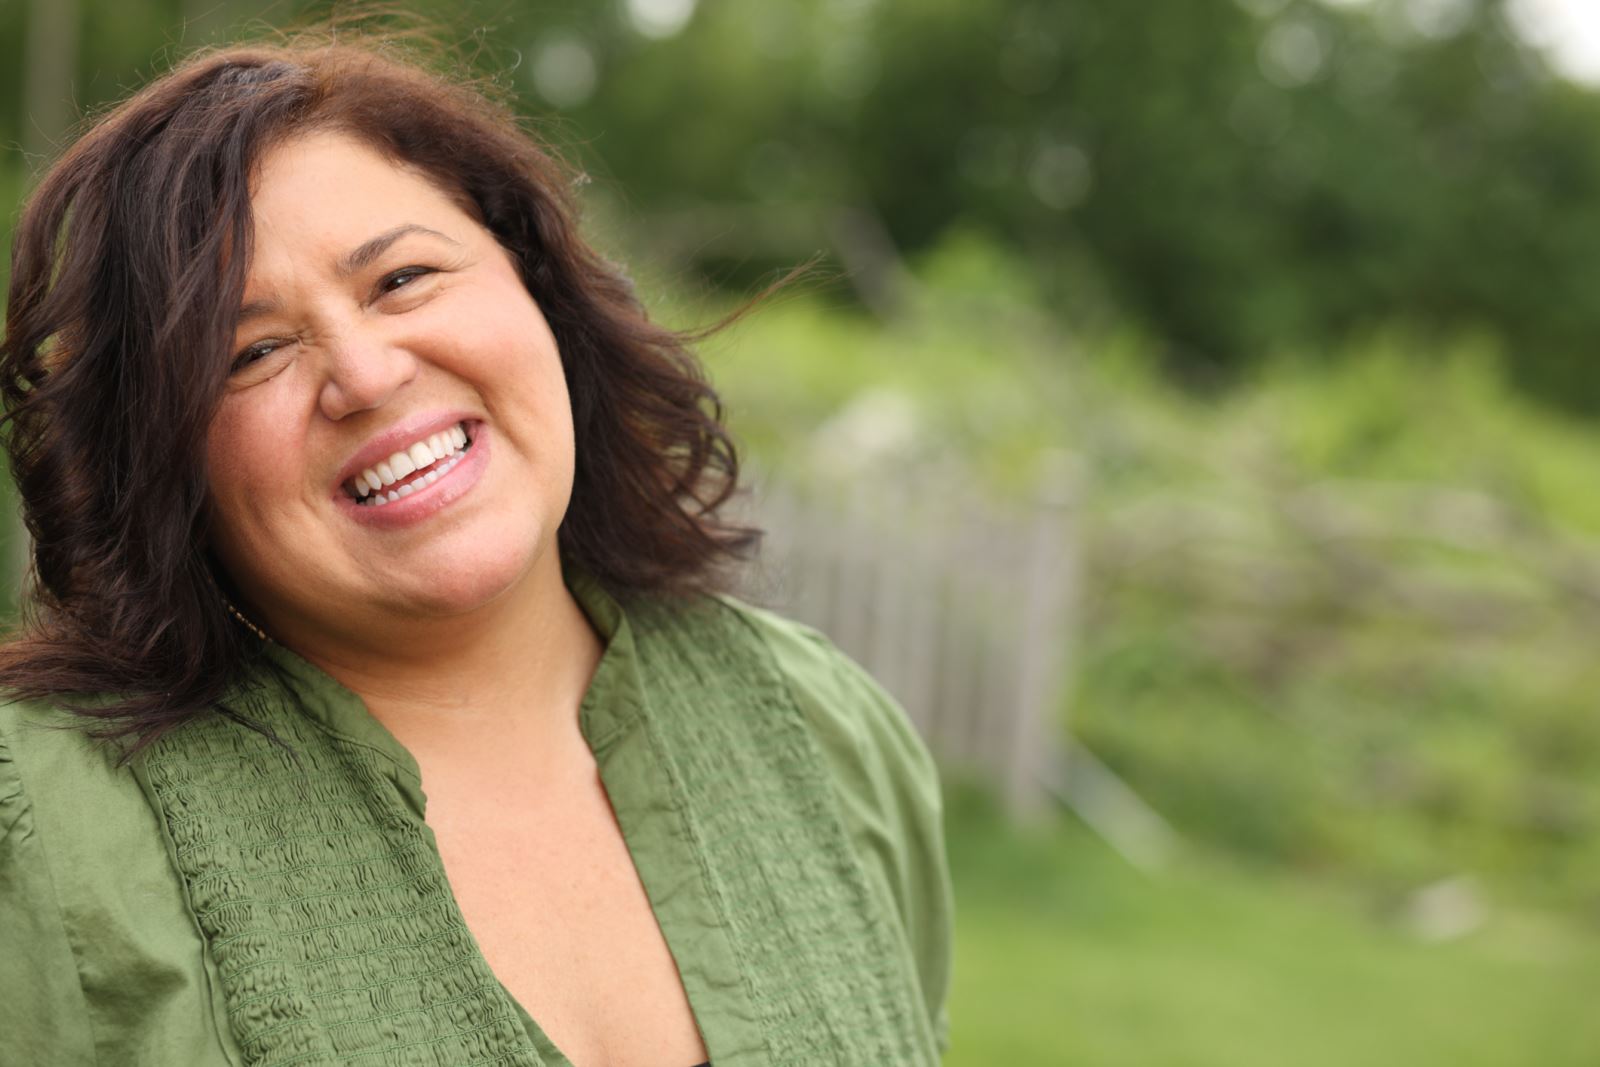 Hispanic woman wearing a green shirt and smiling. 